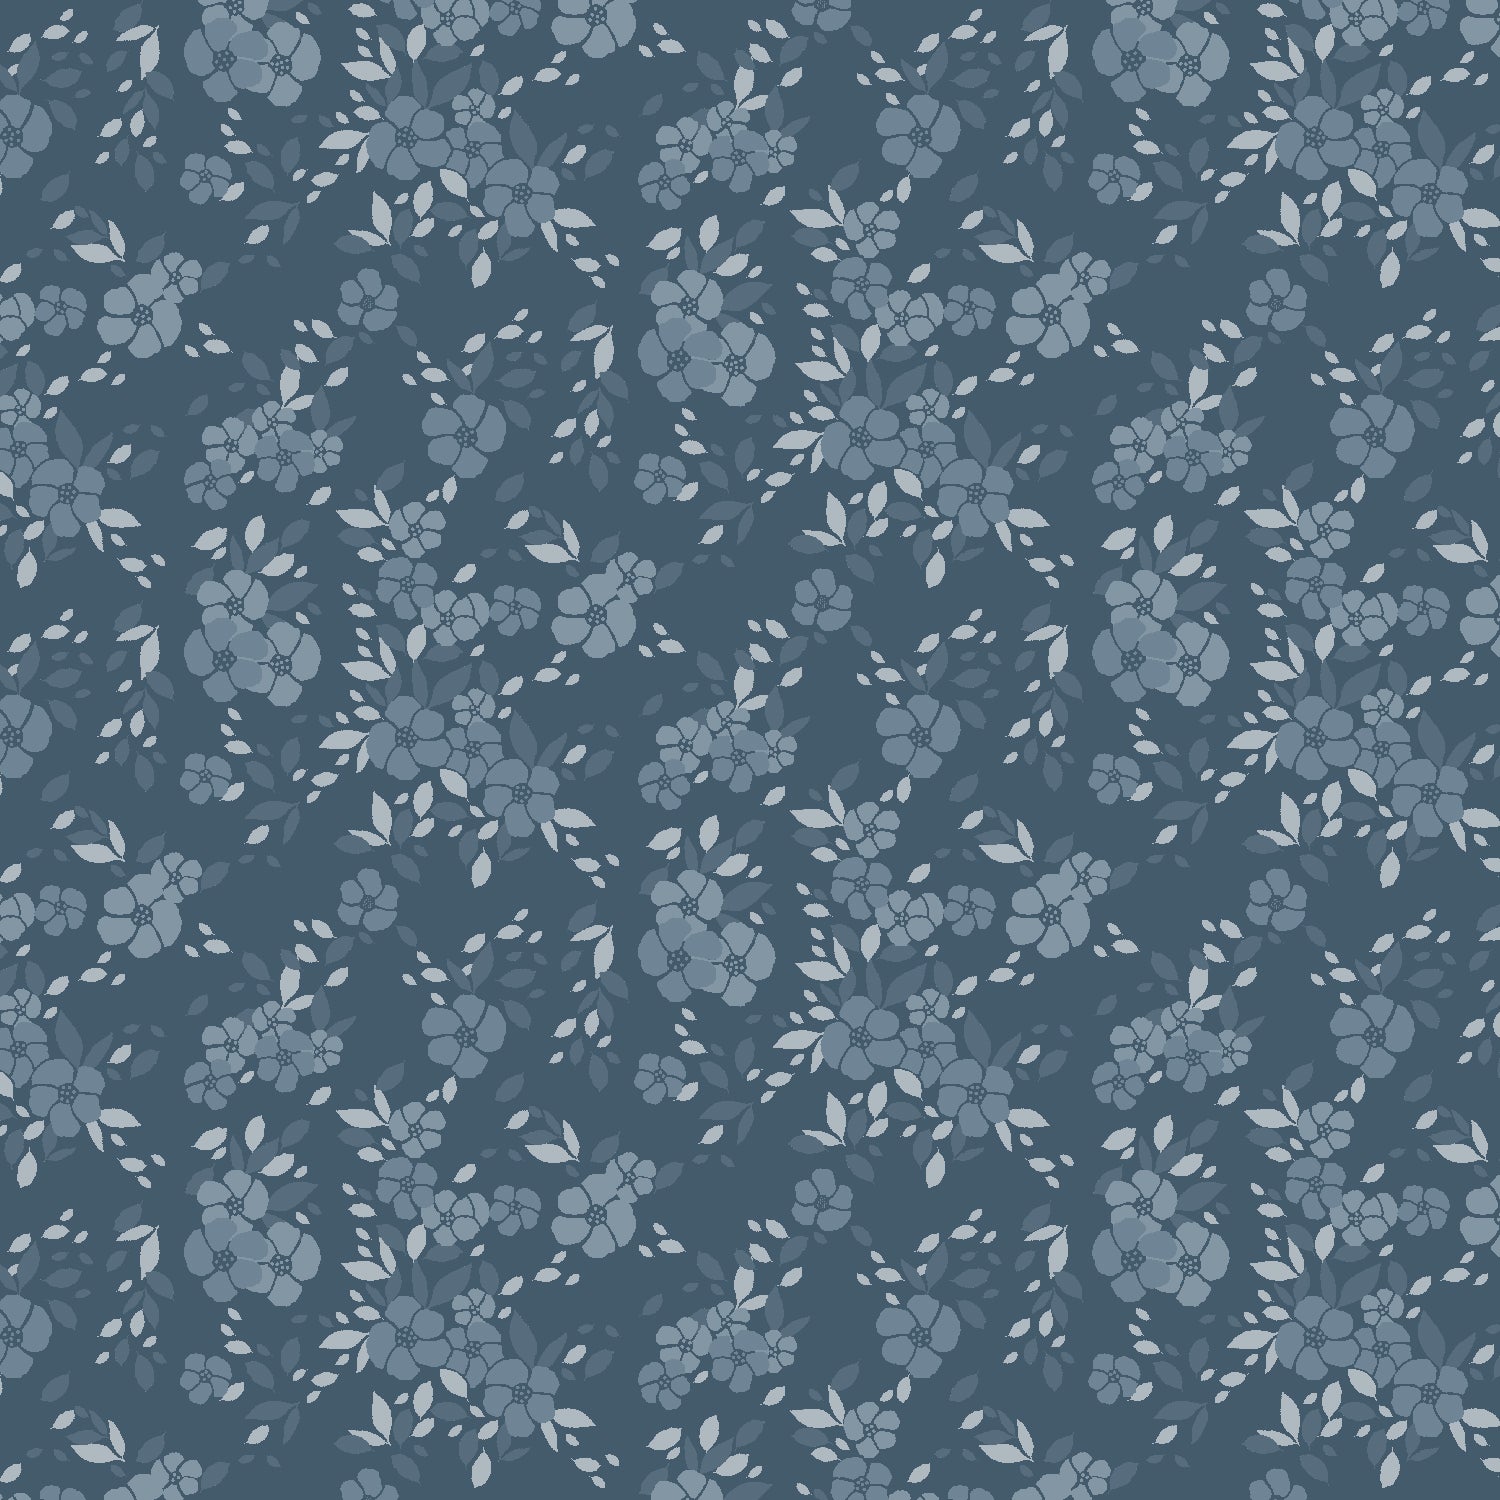 Moonlight Garden Quilt Fabric - Poesie Perfume Tonal Floral in Navy Blue - RJ5504-NA1